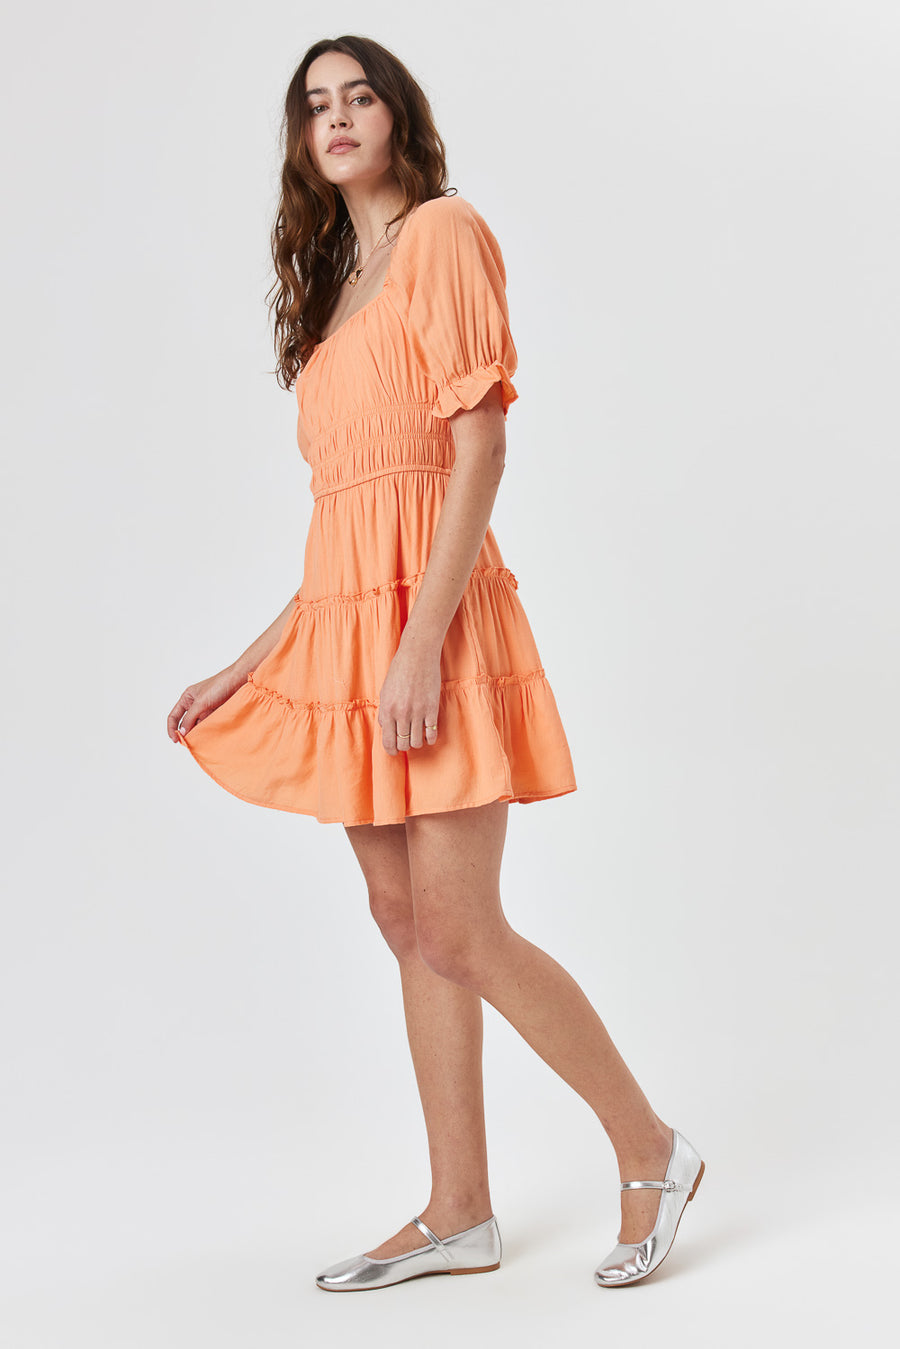 Cantaloupe Tier Dress - Trixxi Clothing